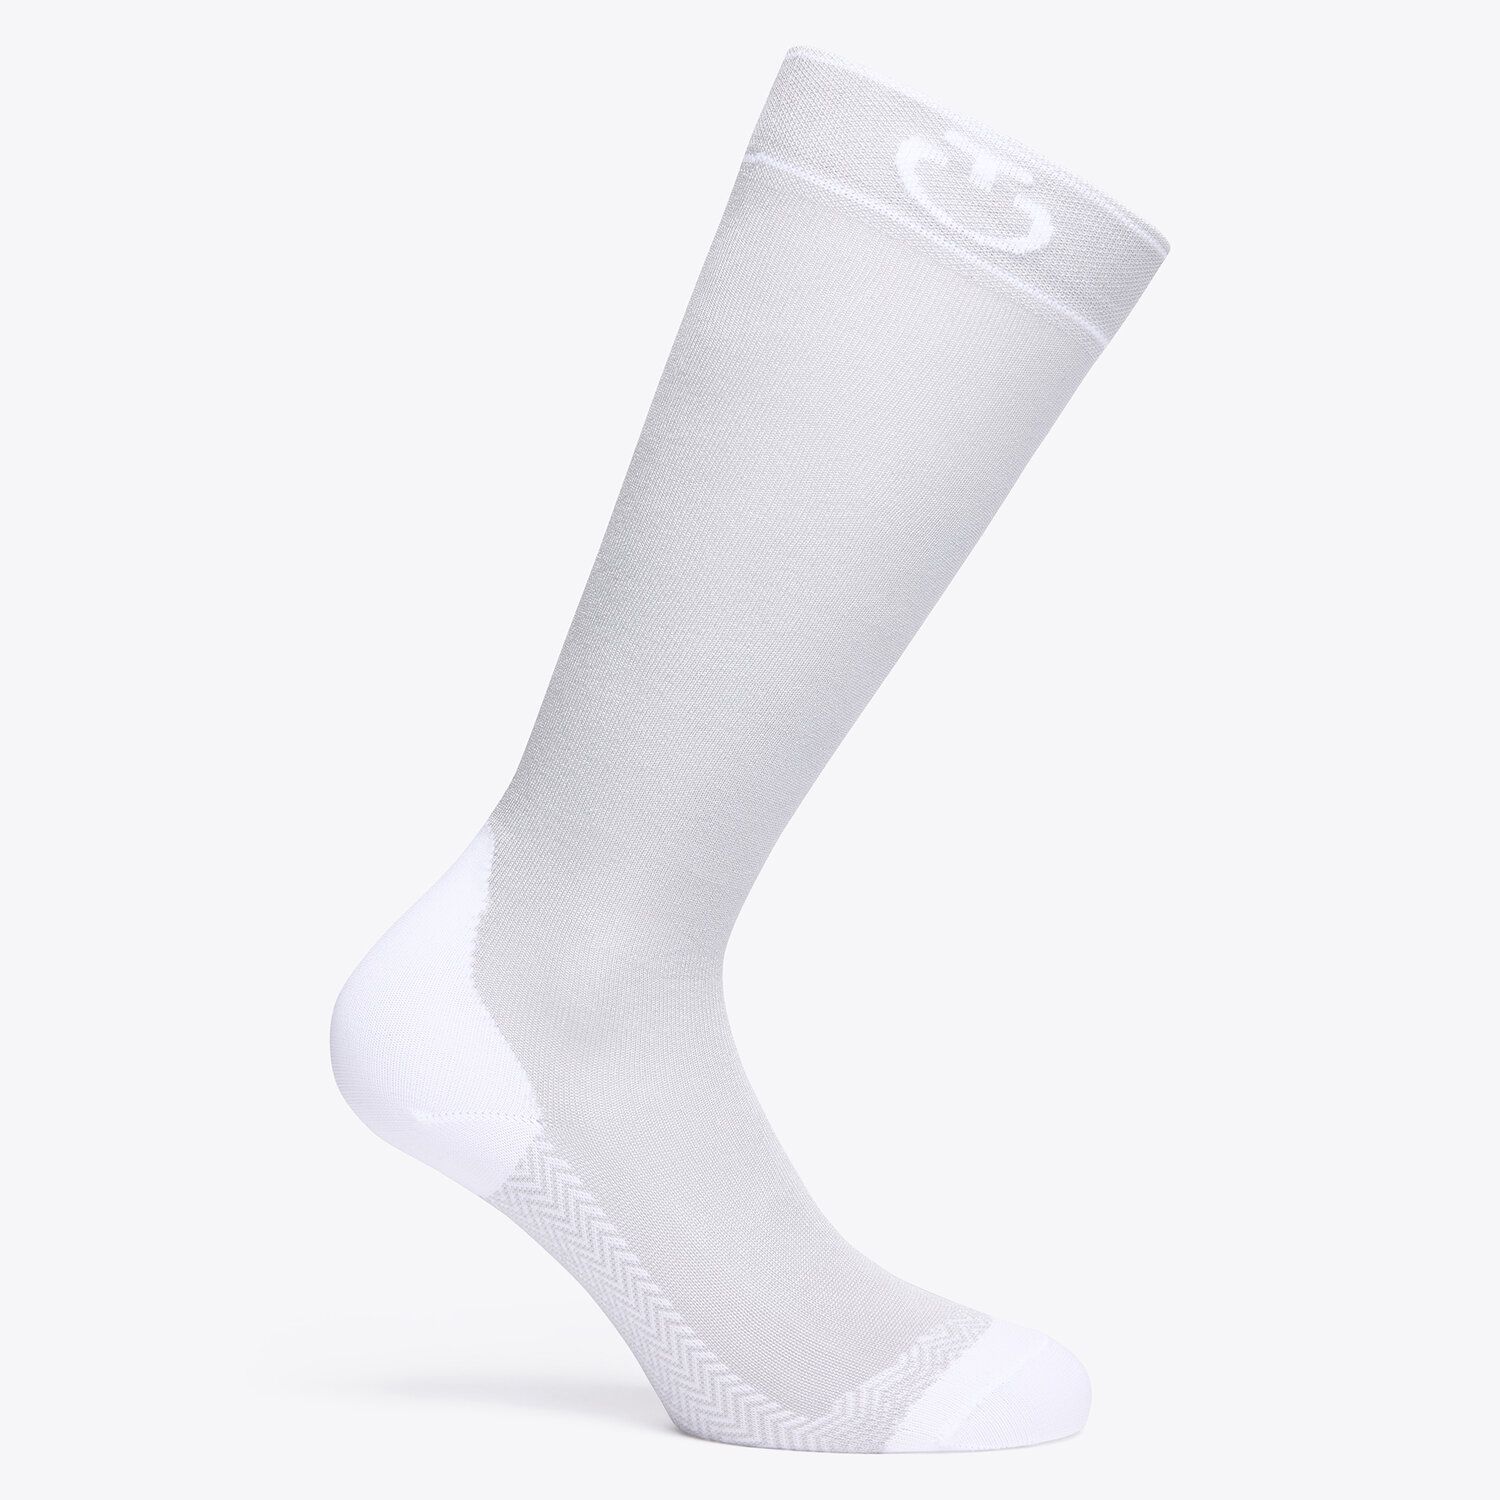 Cavalleria Toscana Sports socks LIGHT GREY/WHITE-1